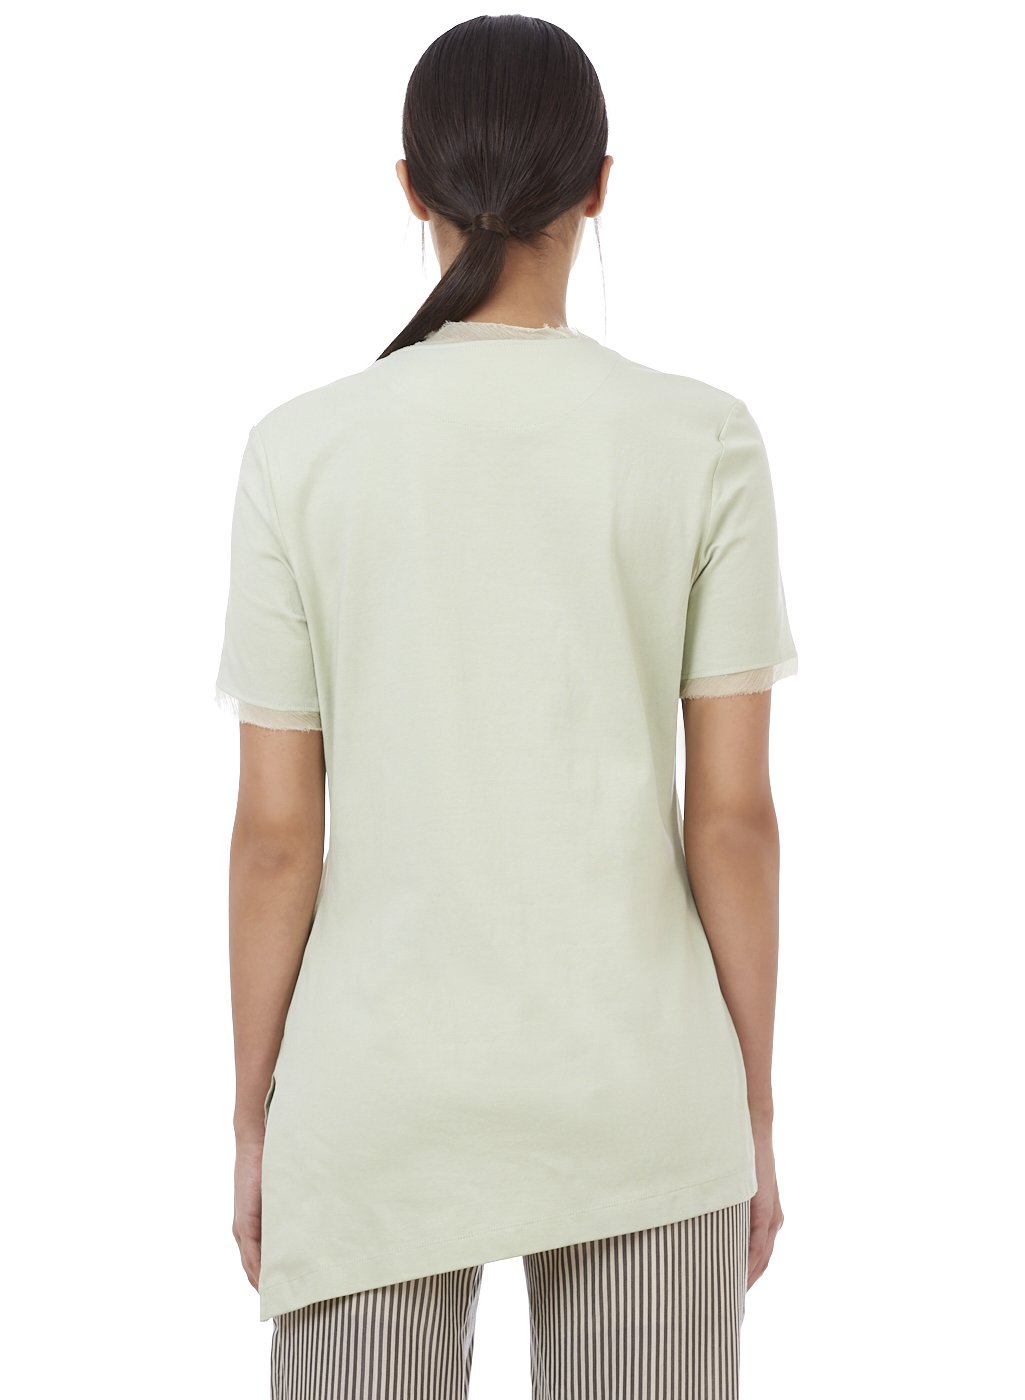 Macy T Shirt - Genes online store 2020